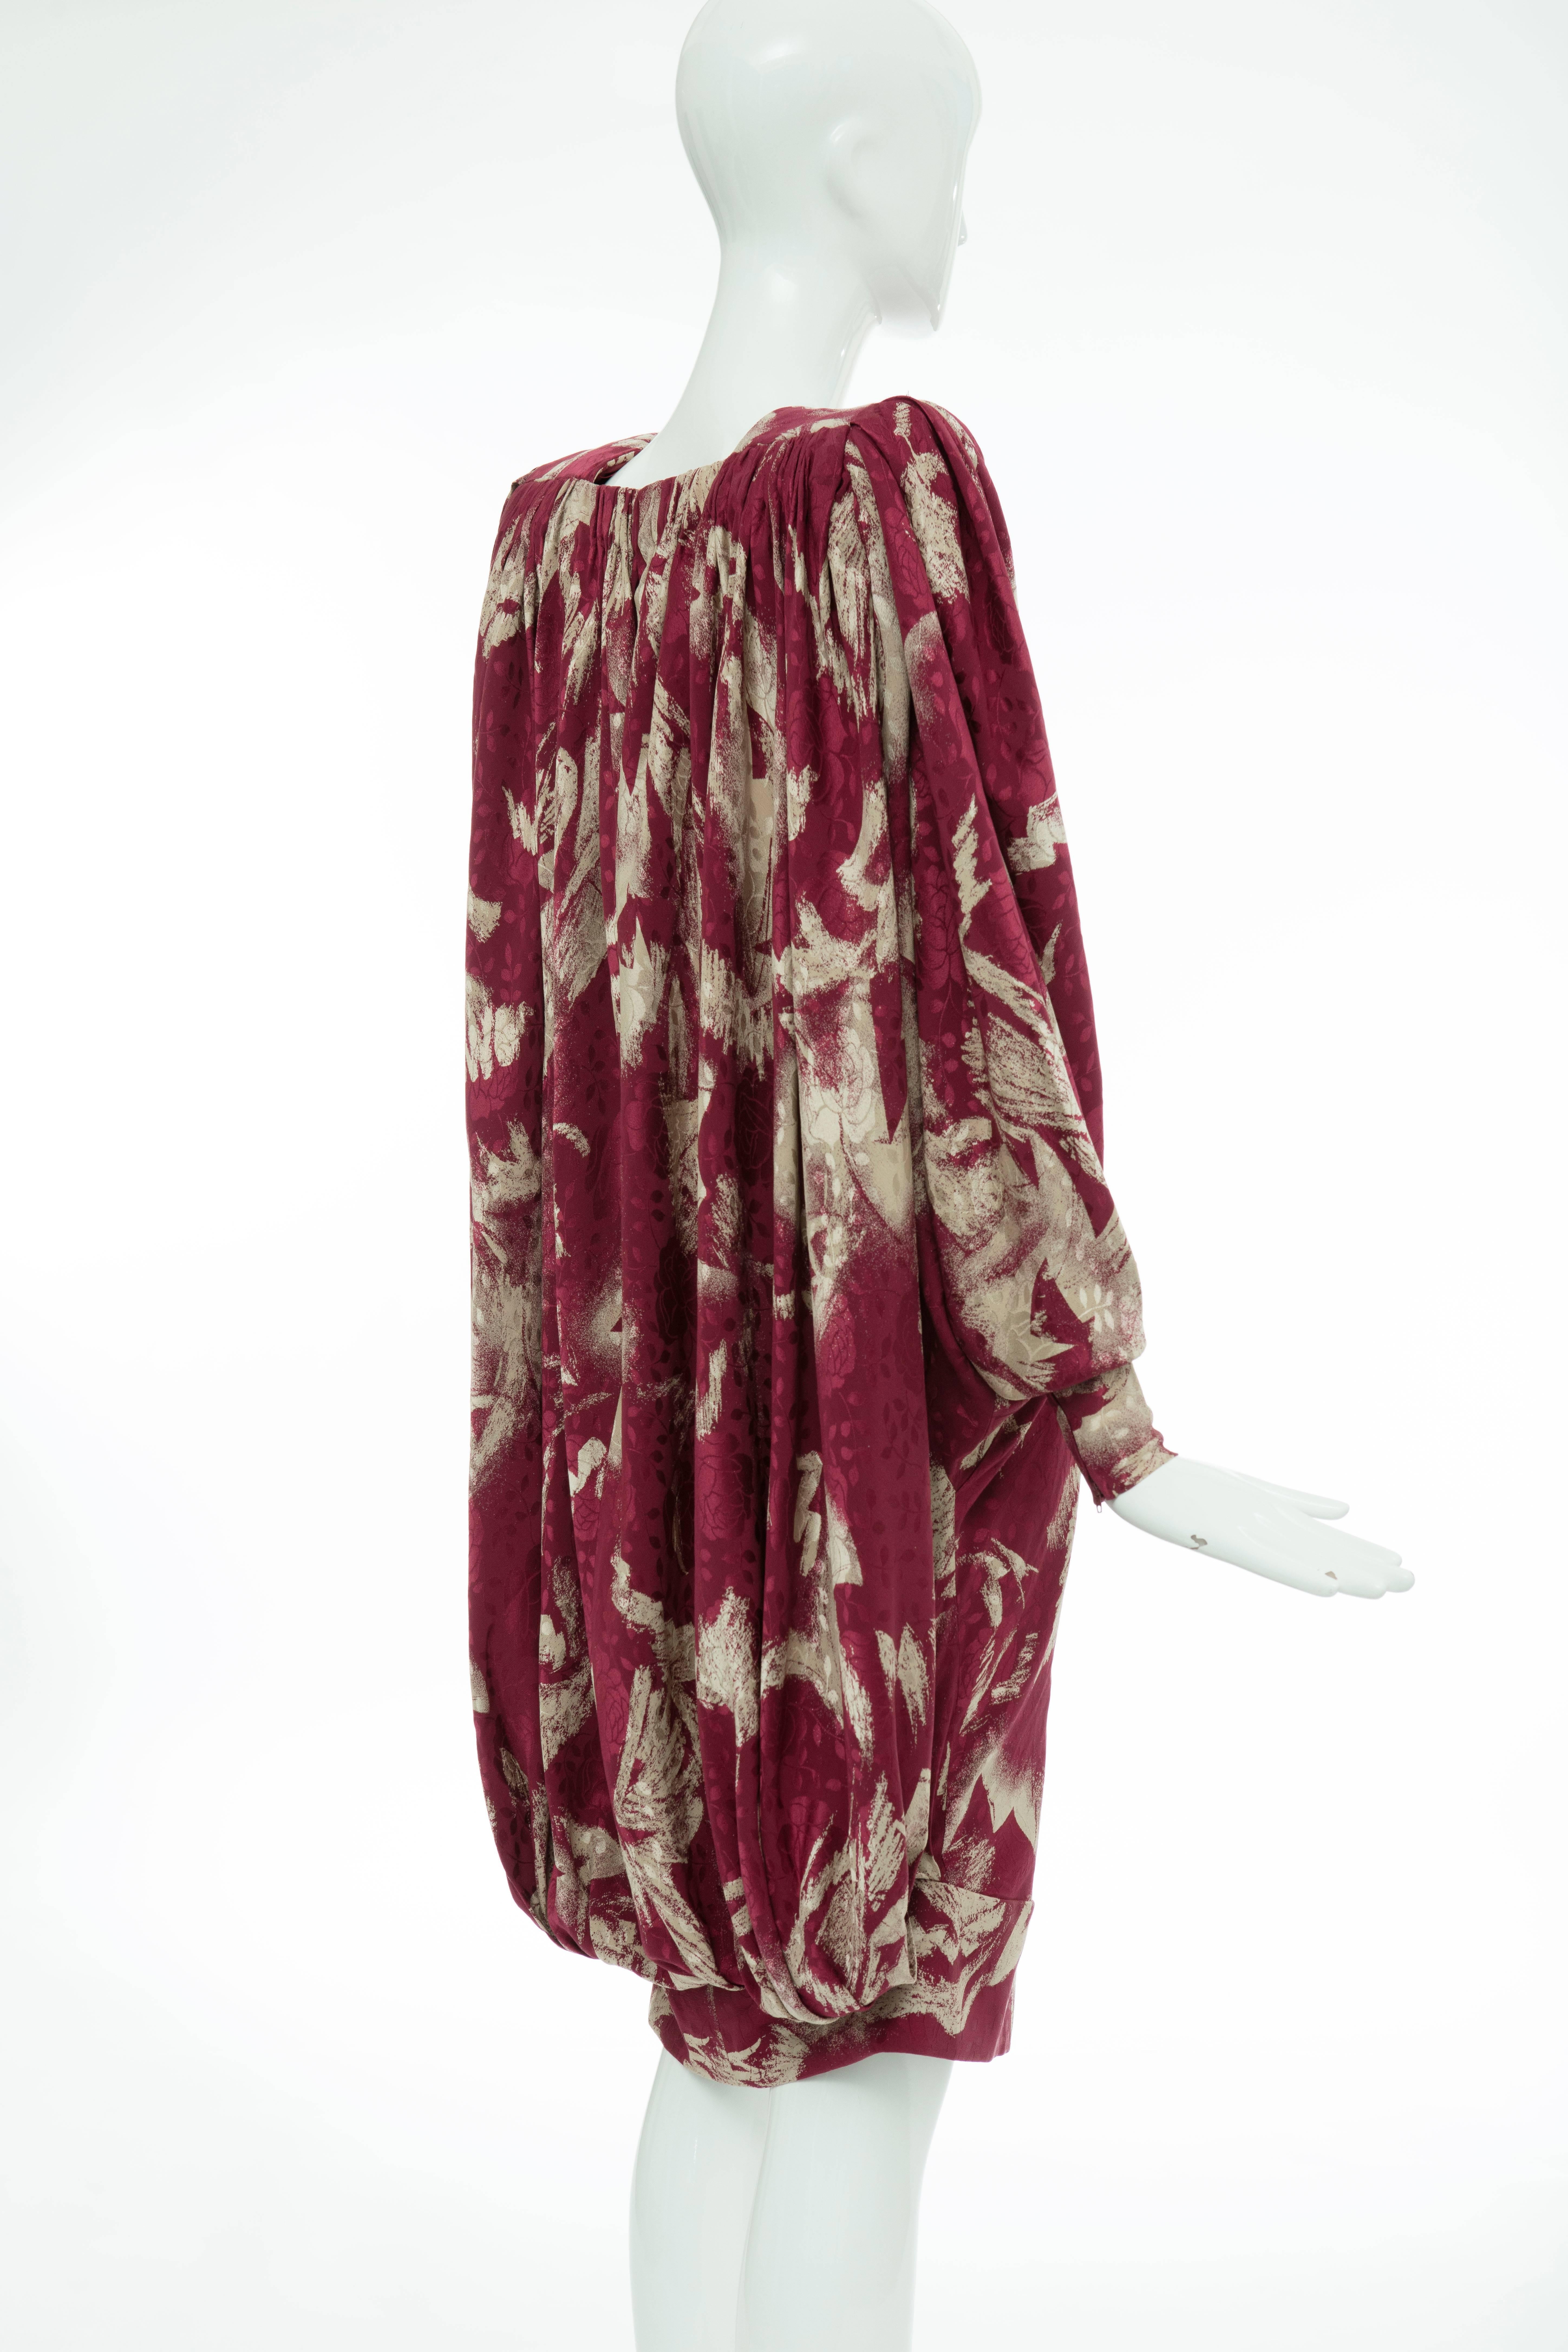 Emanuel Ungaro Couture Paris Printed Silk Balloon Collection Dress, Circa 1980s For Sale 2